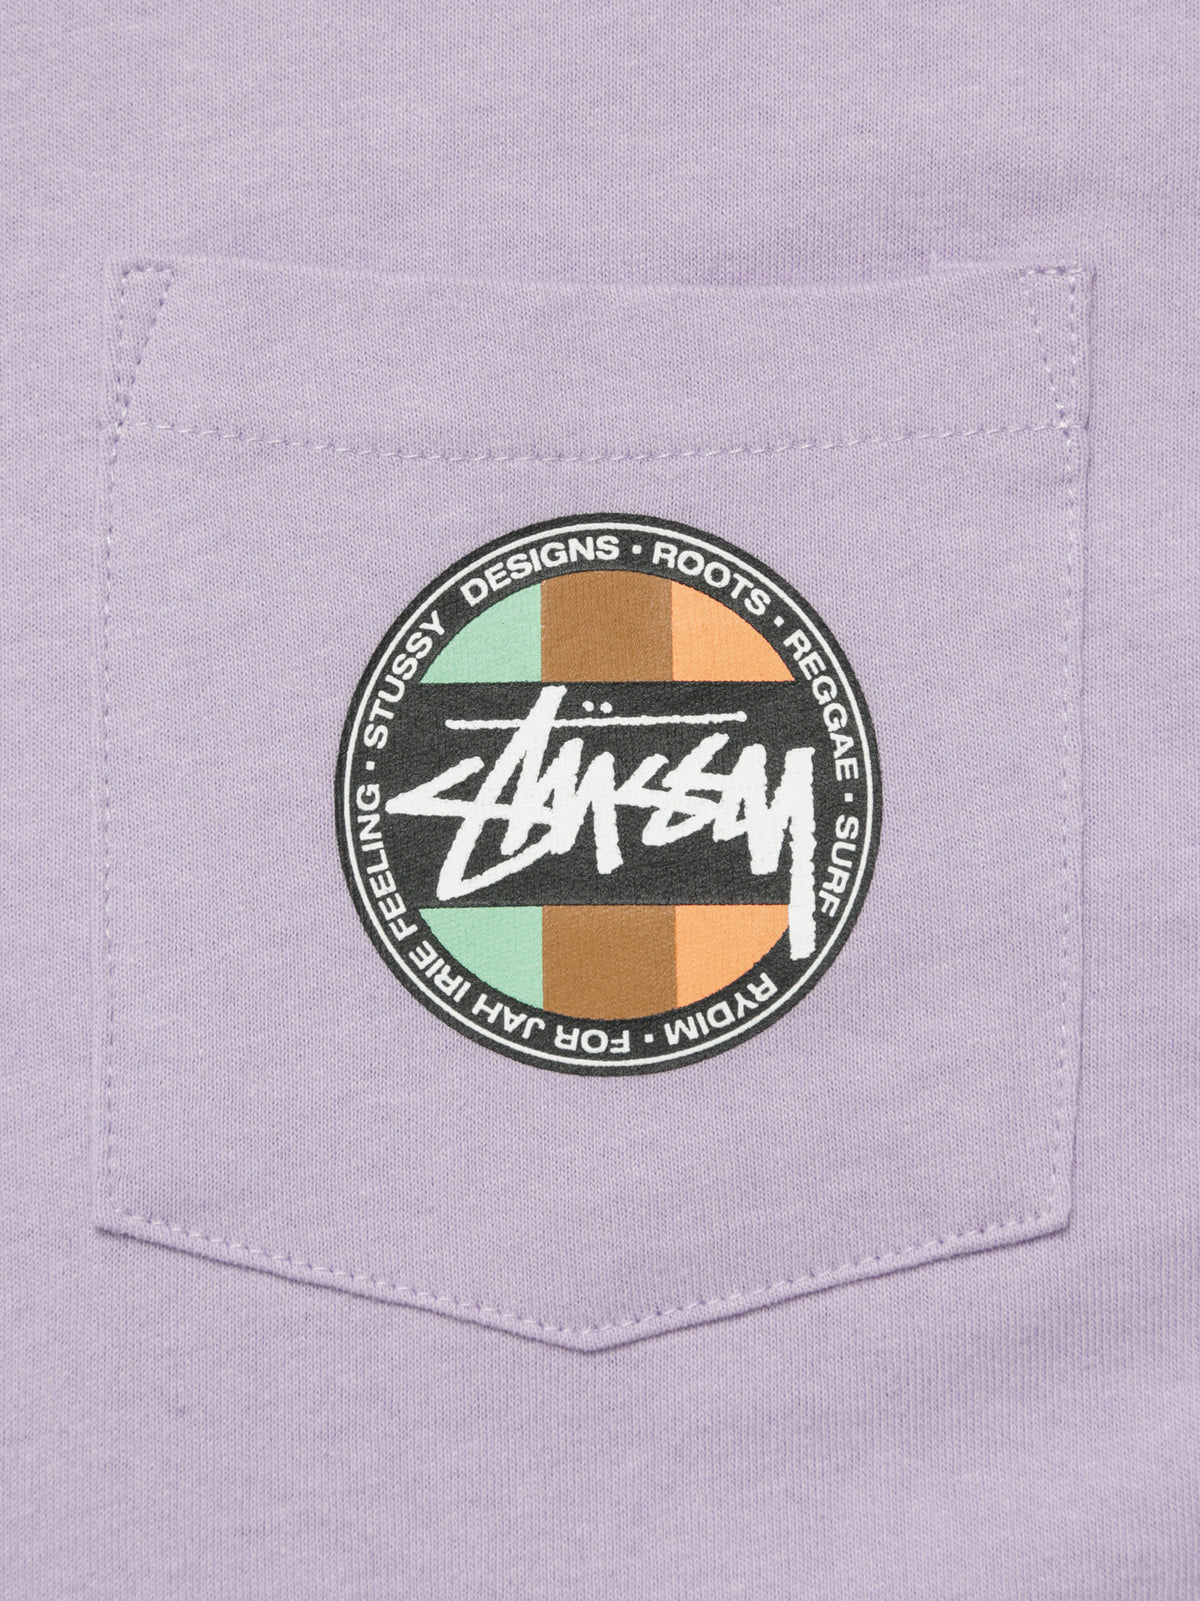 Surf Dot Pocket T-Shirt in Lilac